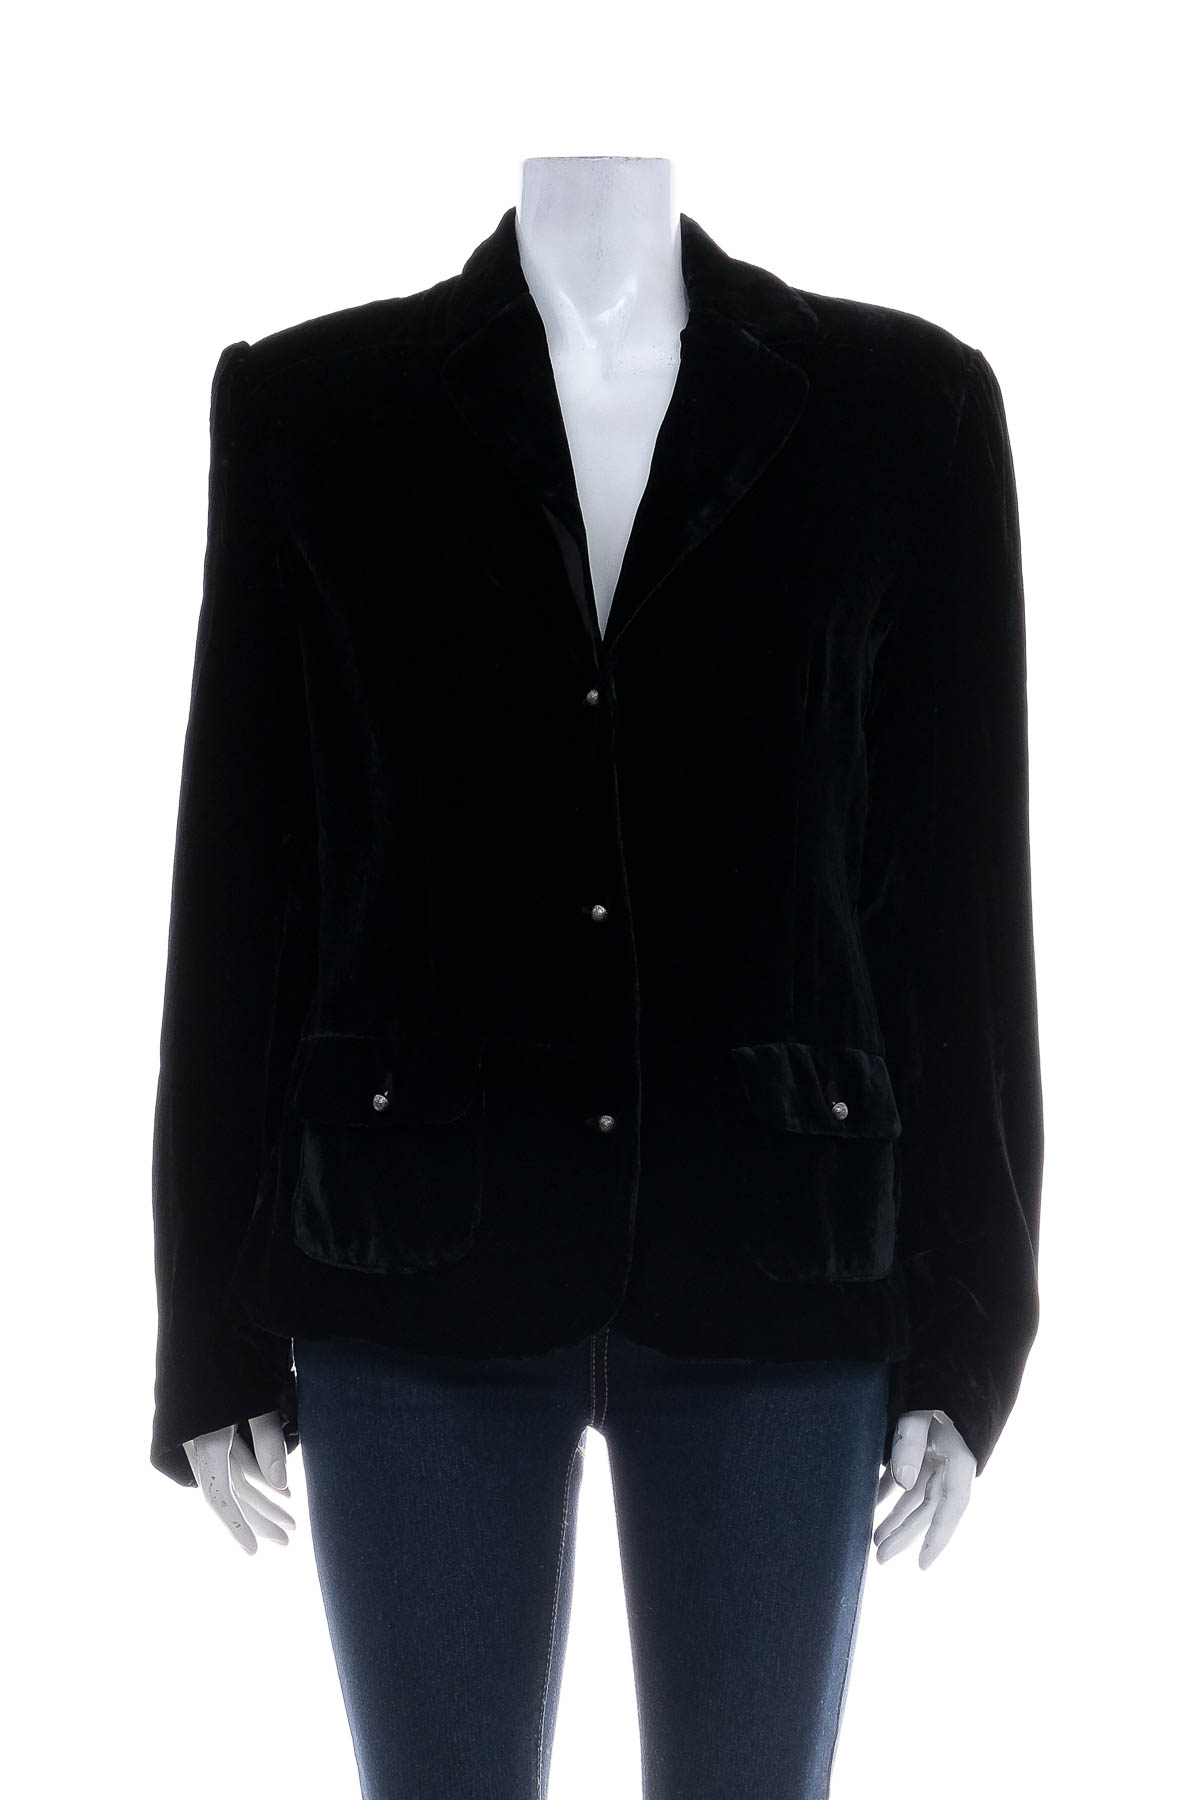 Women's blazer - Edition De Luxe by Tchibo - 0